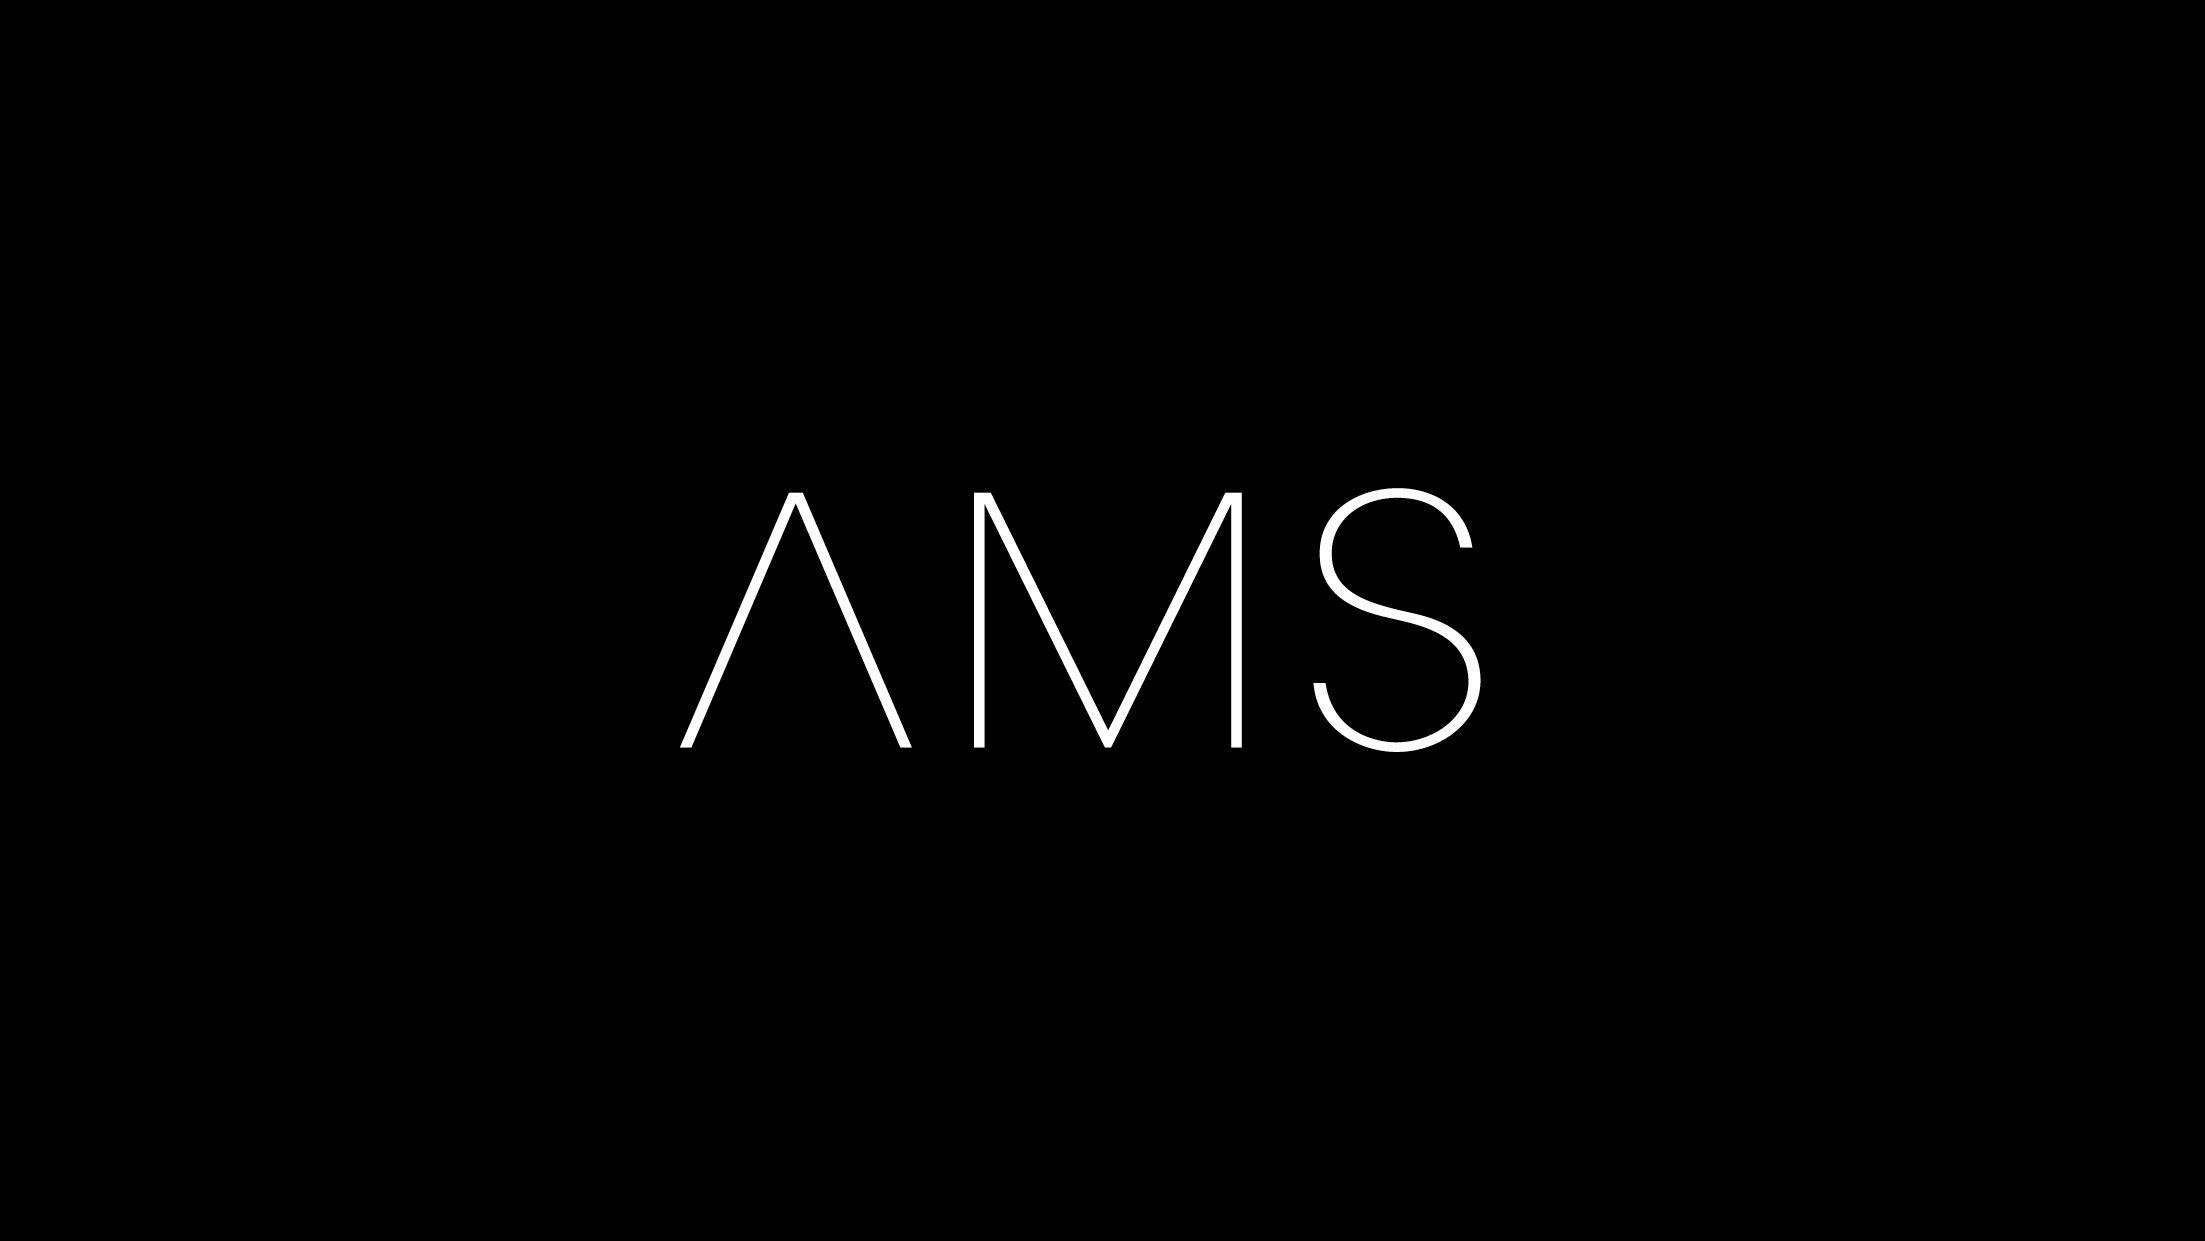 AMS Logo - AMS - Alex Araez | Freelance Graphic Designer & Art Director